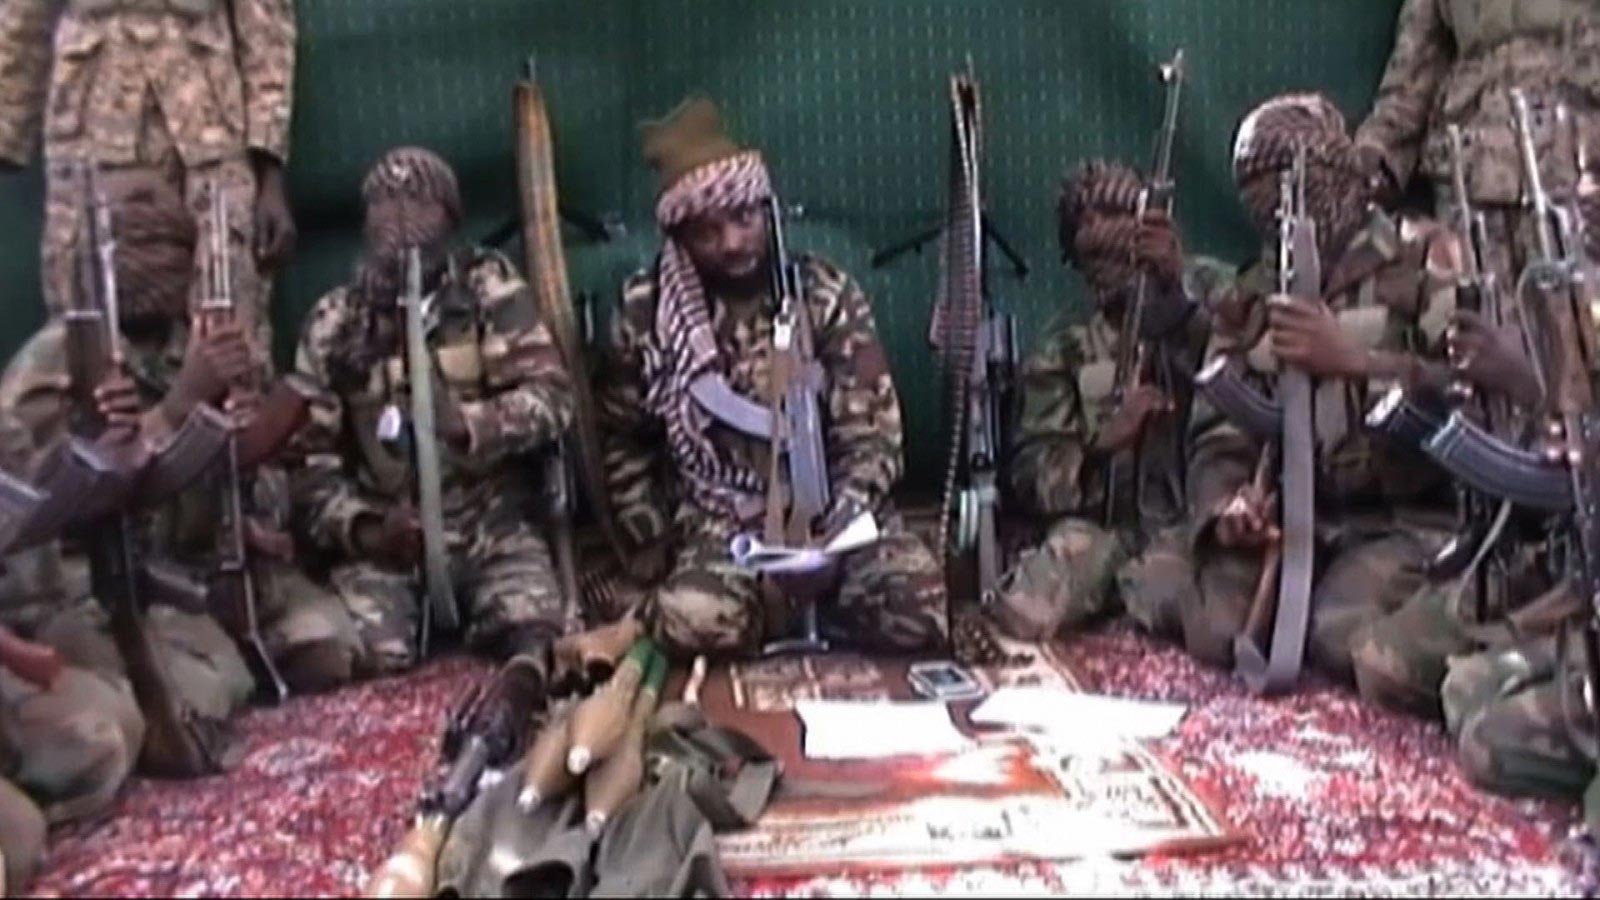 9 Members Of Boko Haram Captured In Cameroon (Photos)